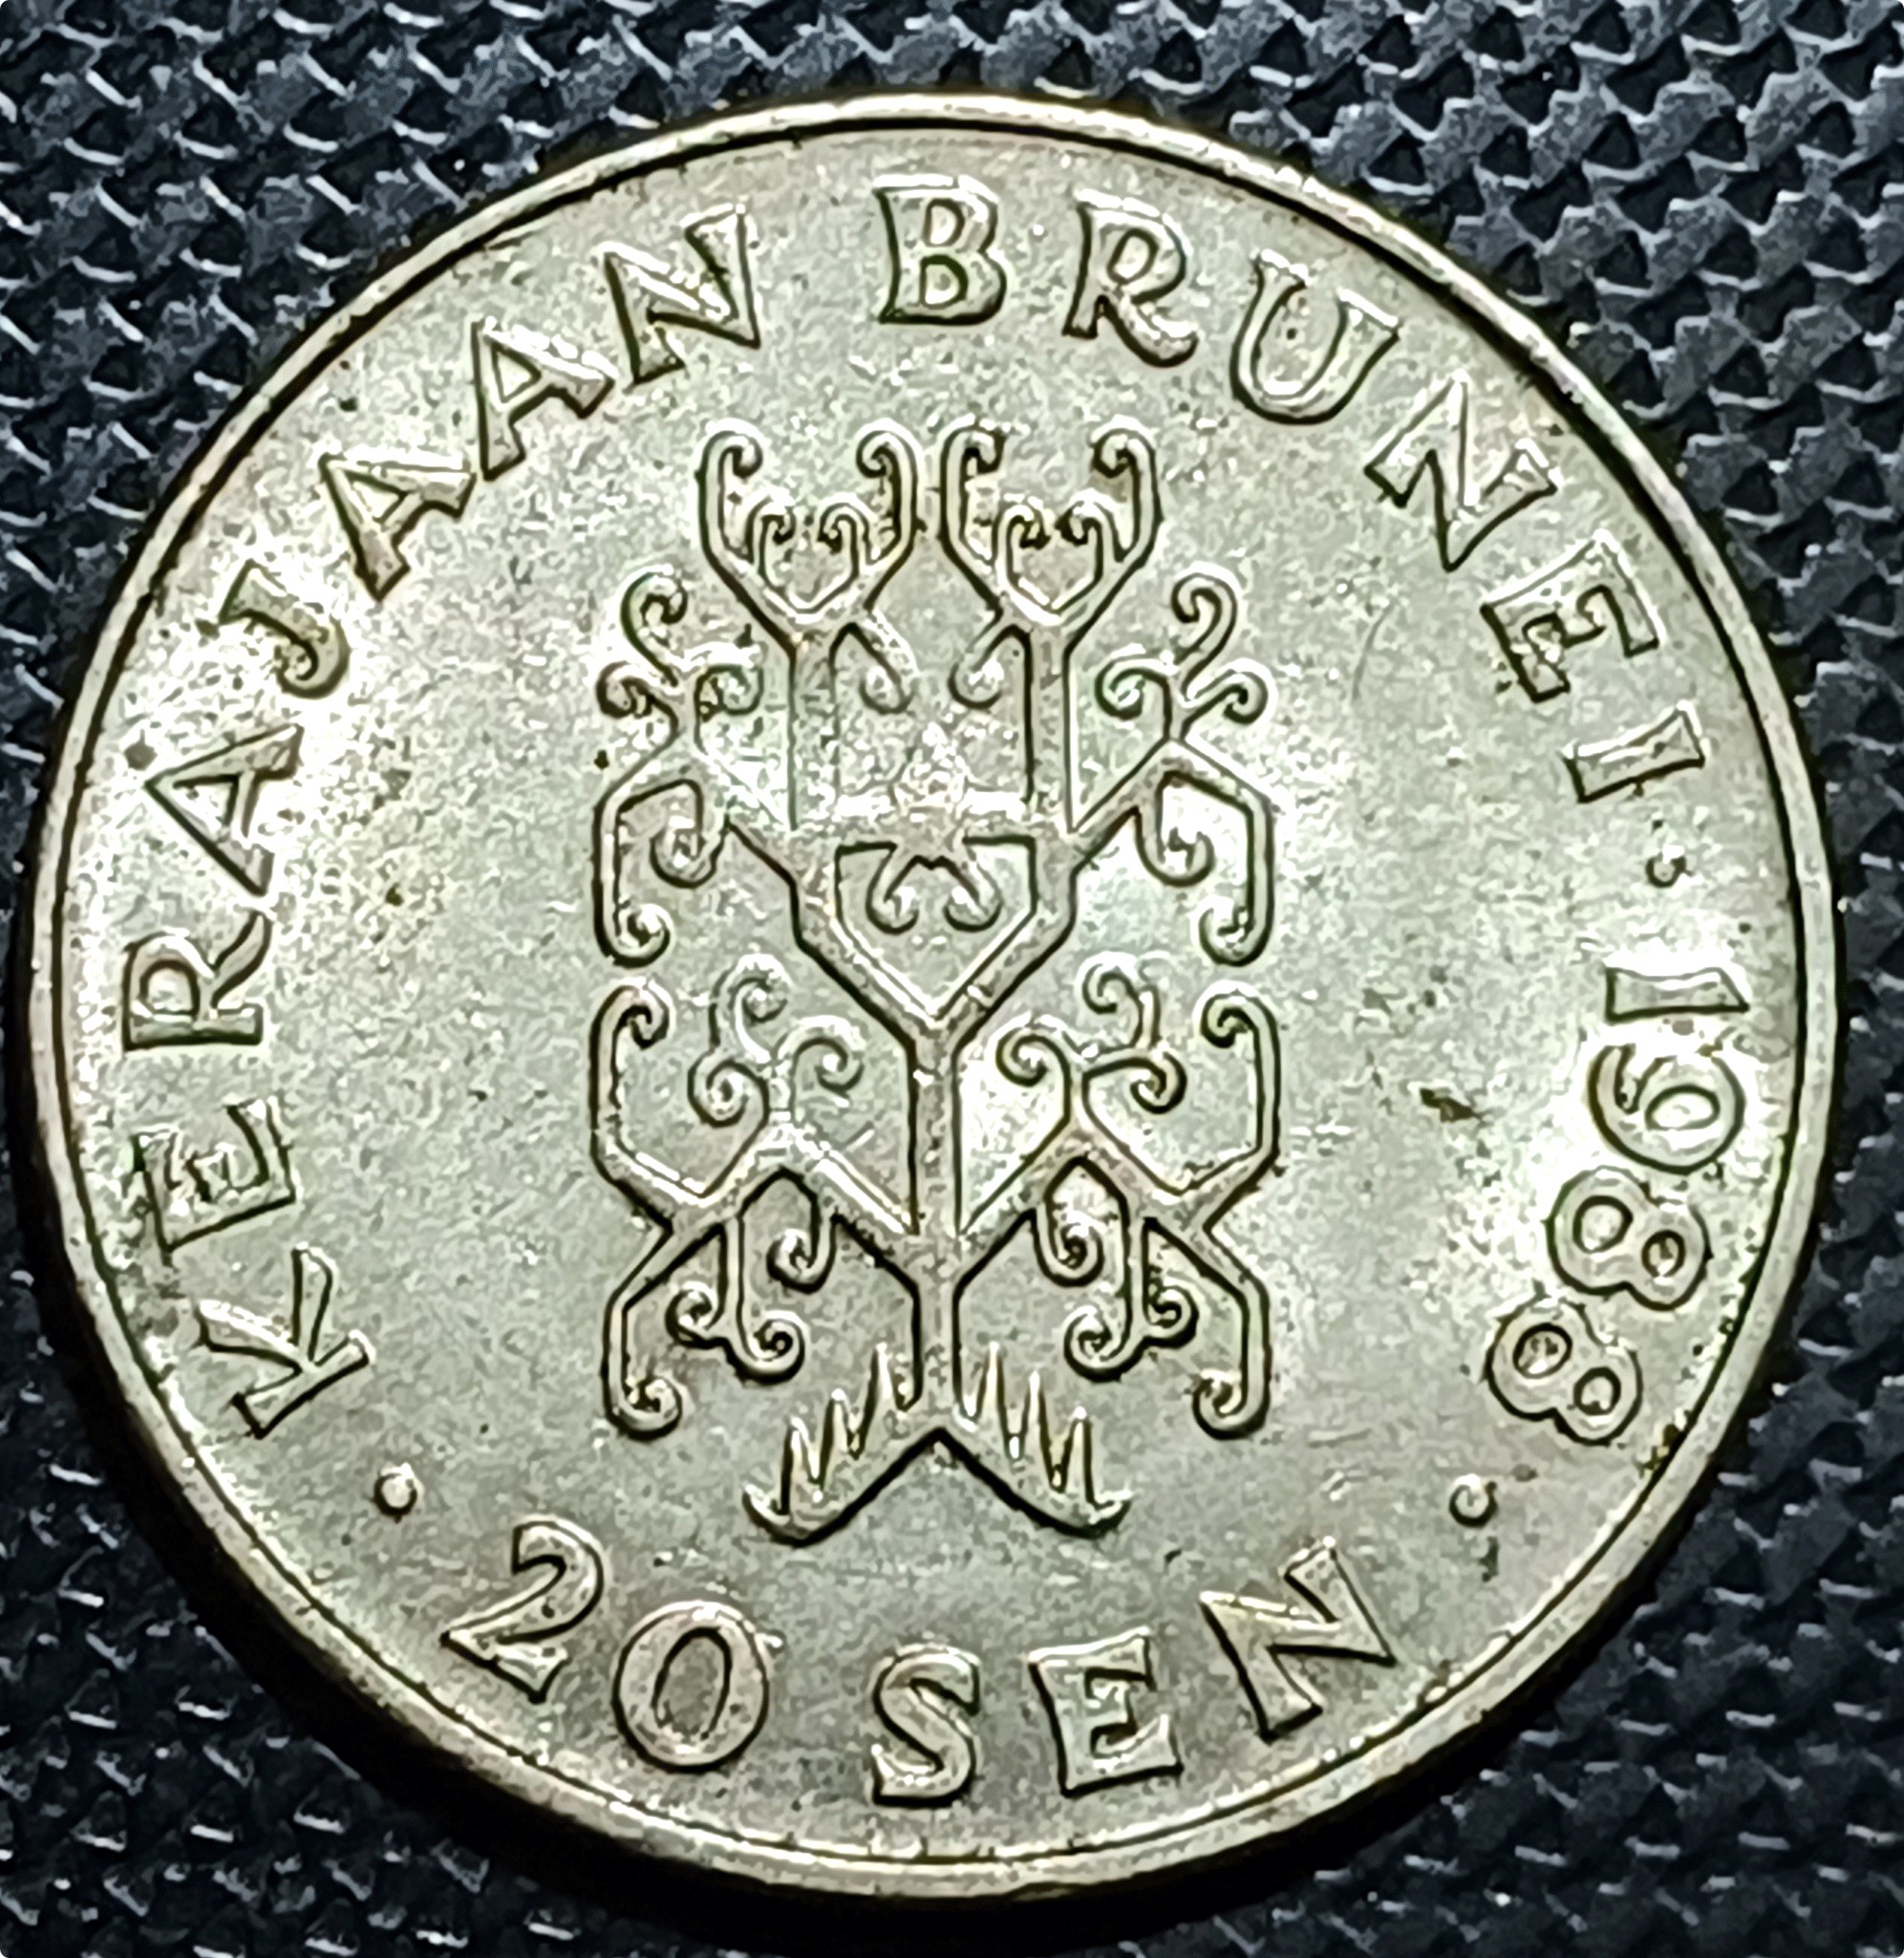 BRUNEI 20 SEN COIN - SULTAN HASSANAL BOLKIAH I - Copper-nickel Coin